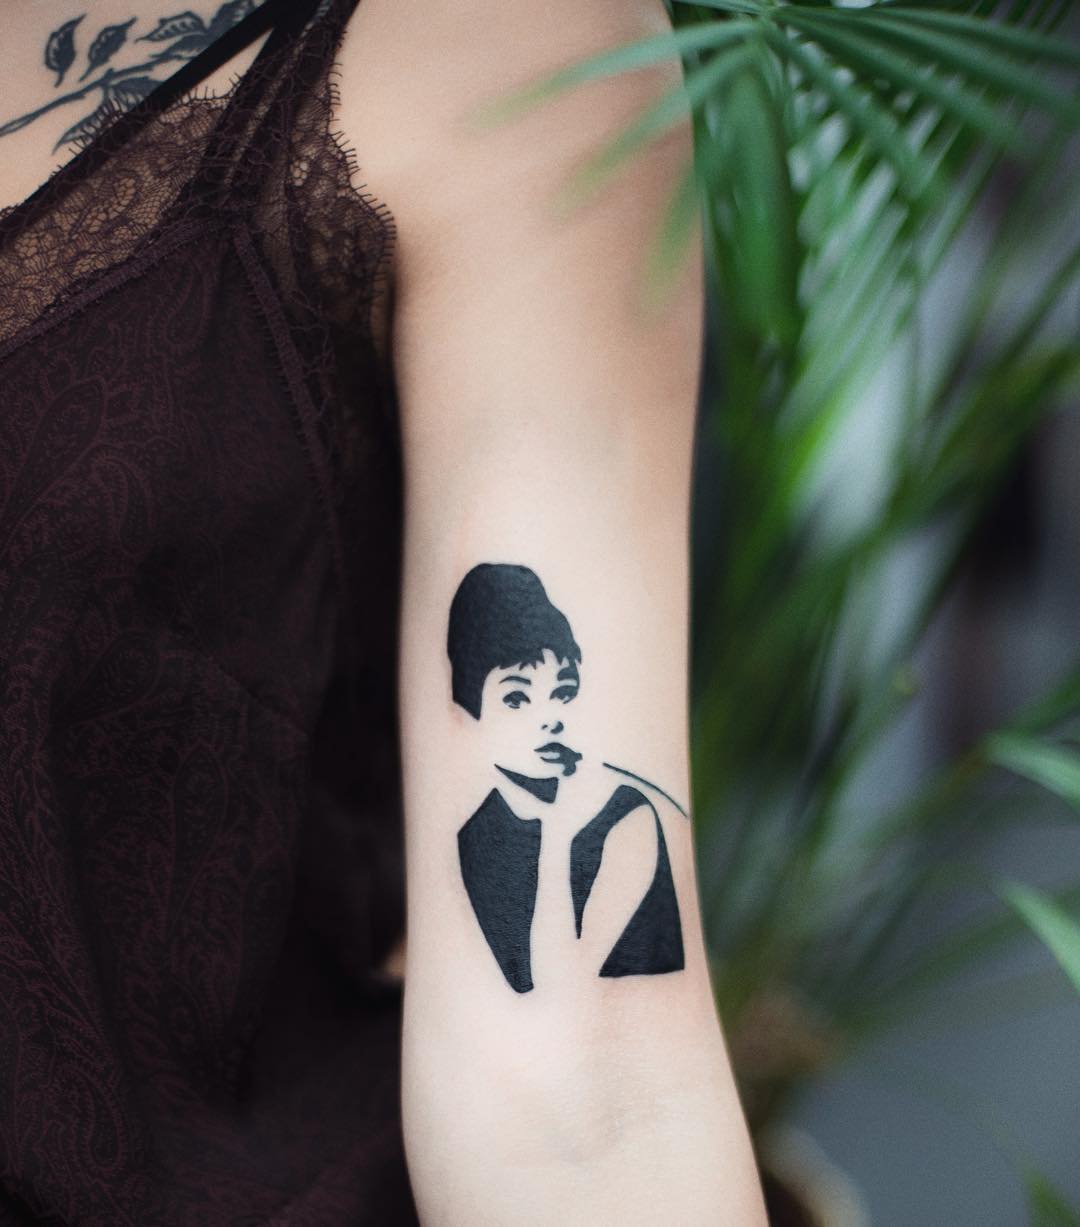 Audrey Hepburn tattoo by Dżudi Bazgrole